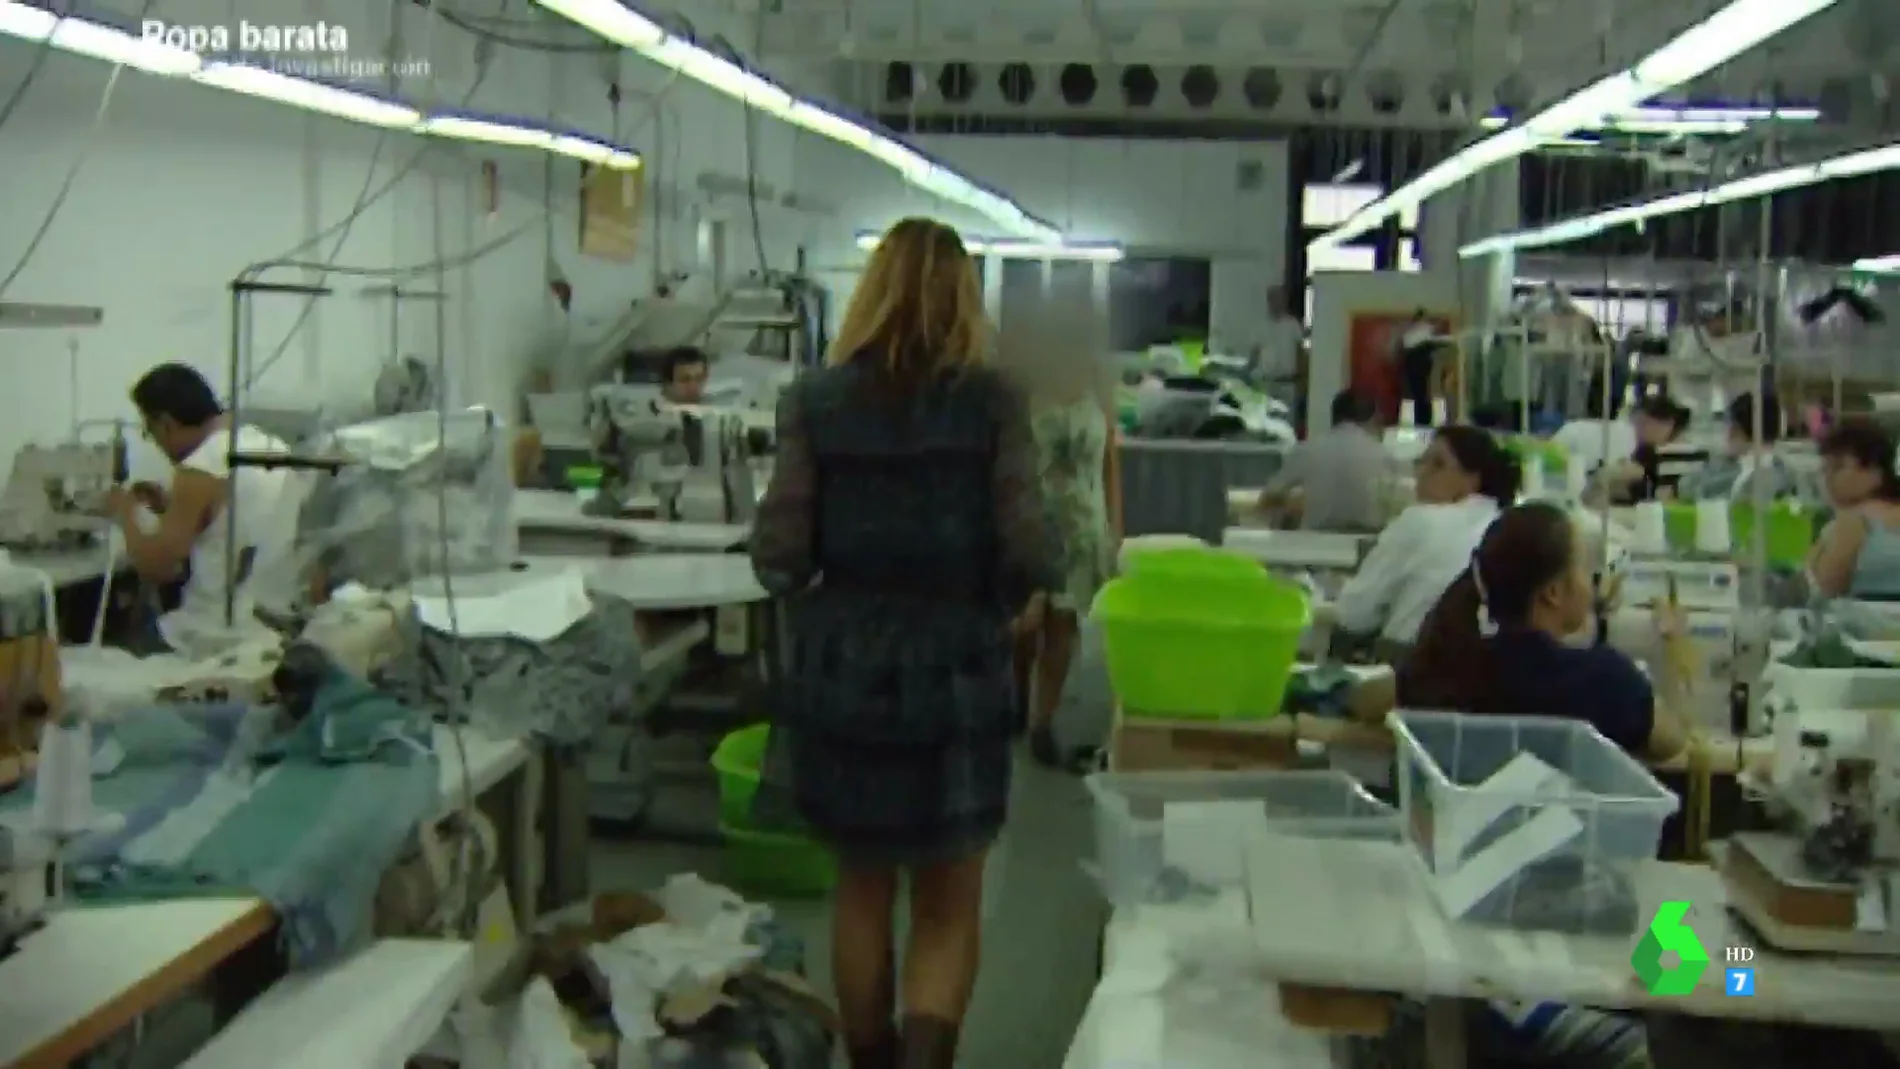 Un taller textil con trabajadores chinos cosen 12 horas día en Madrid, detrás